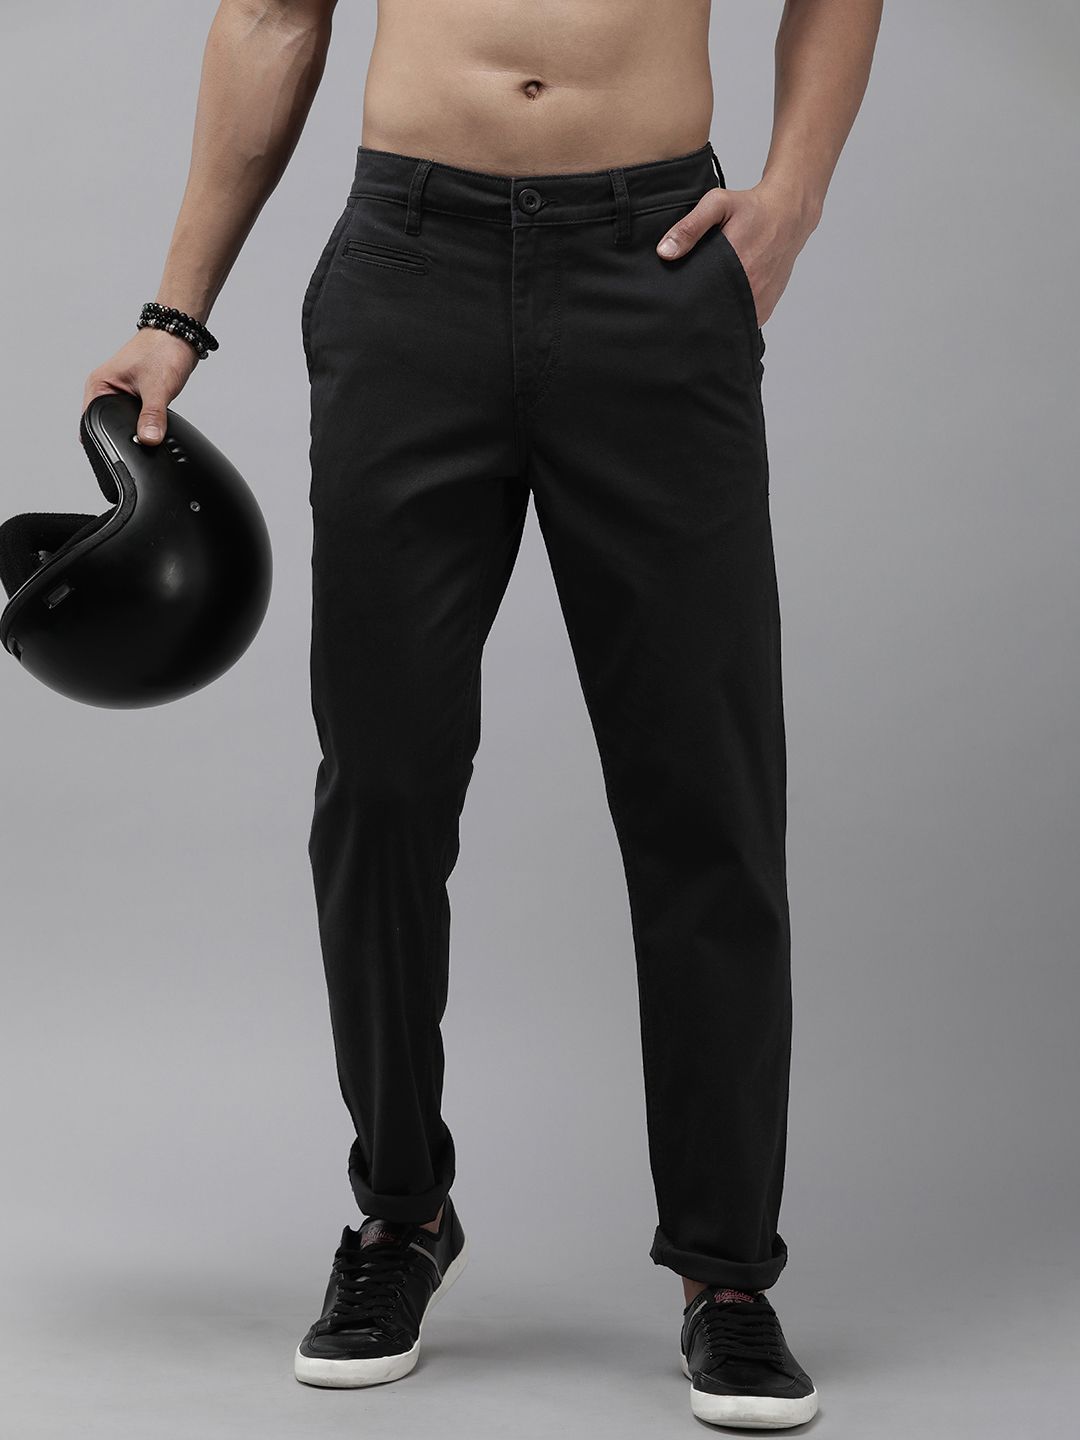 Buy Roadster Black Trousers Online In India